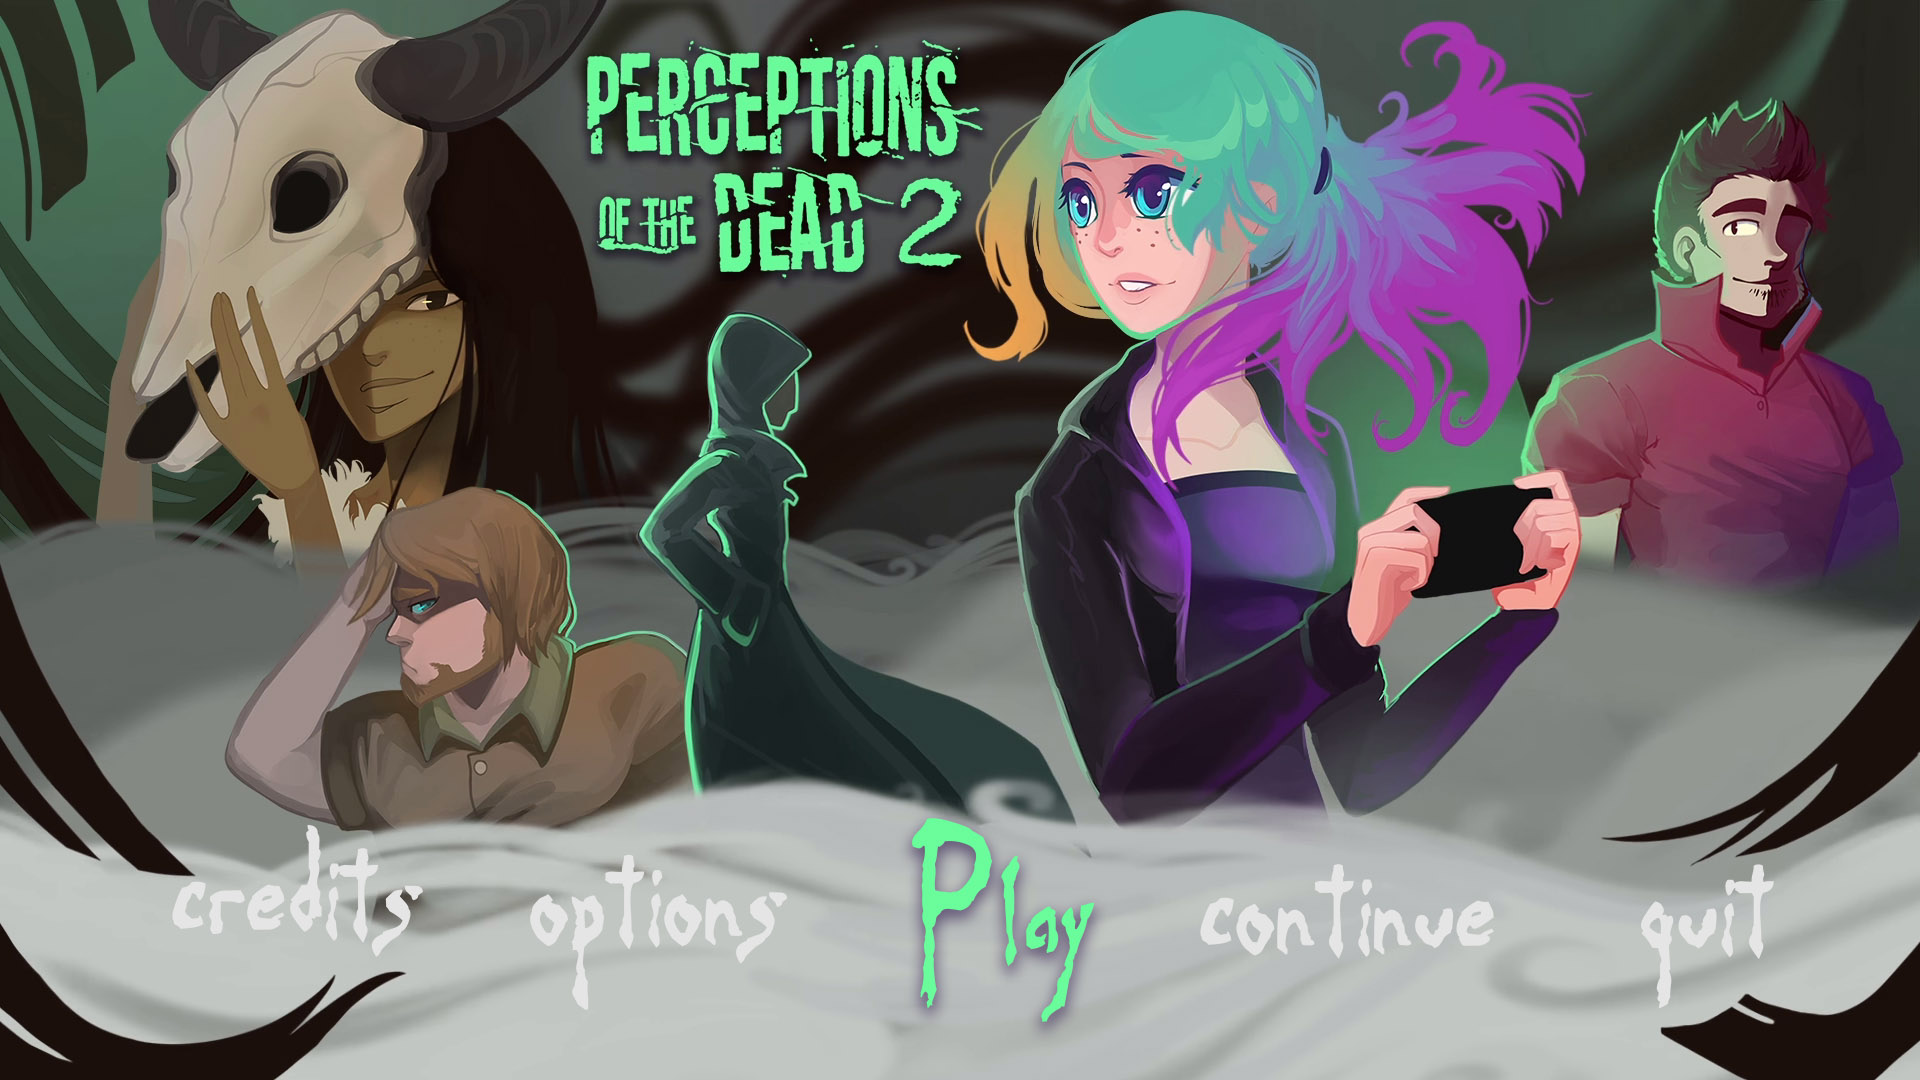 Perceptions of the Dead 2 screenshot